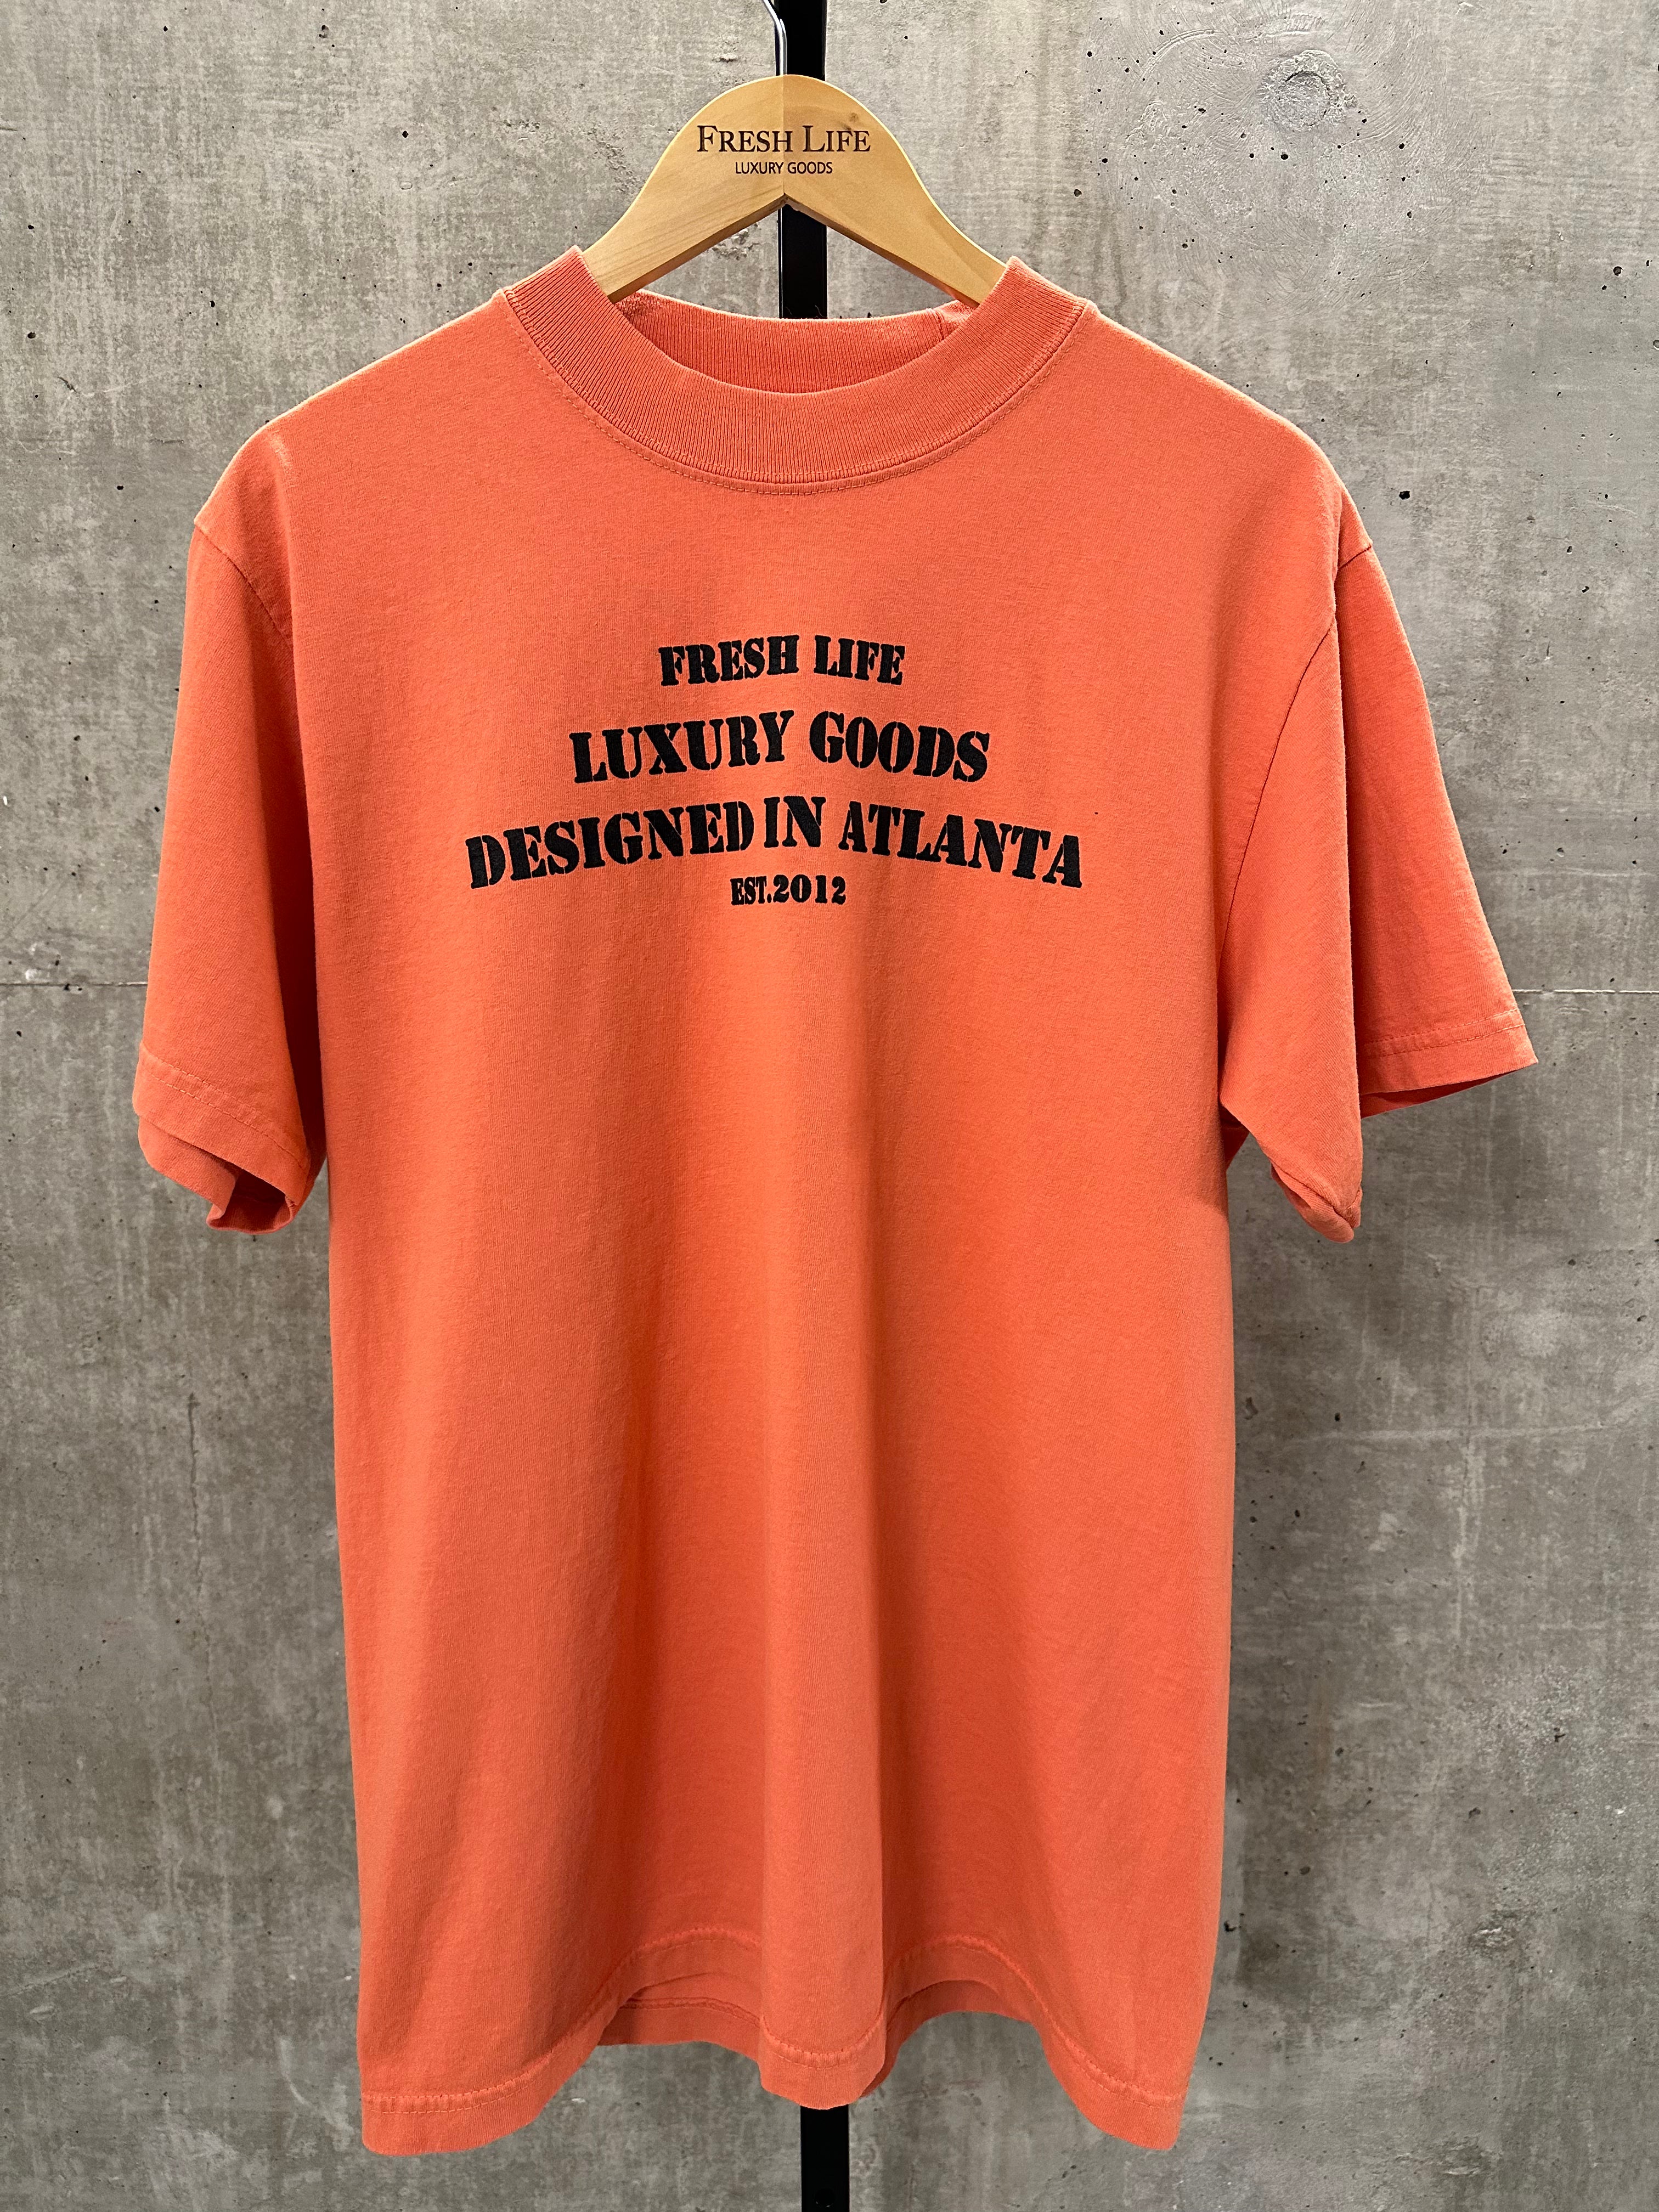 Atlanta Braves The Big Peach Shirt - Trend T Shirt Store Online